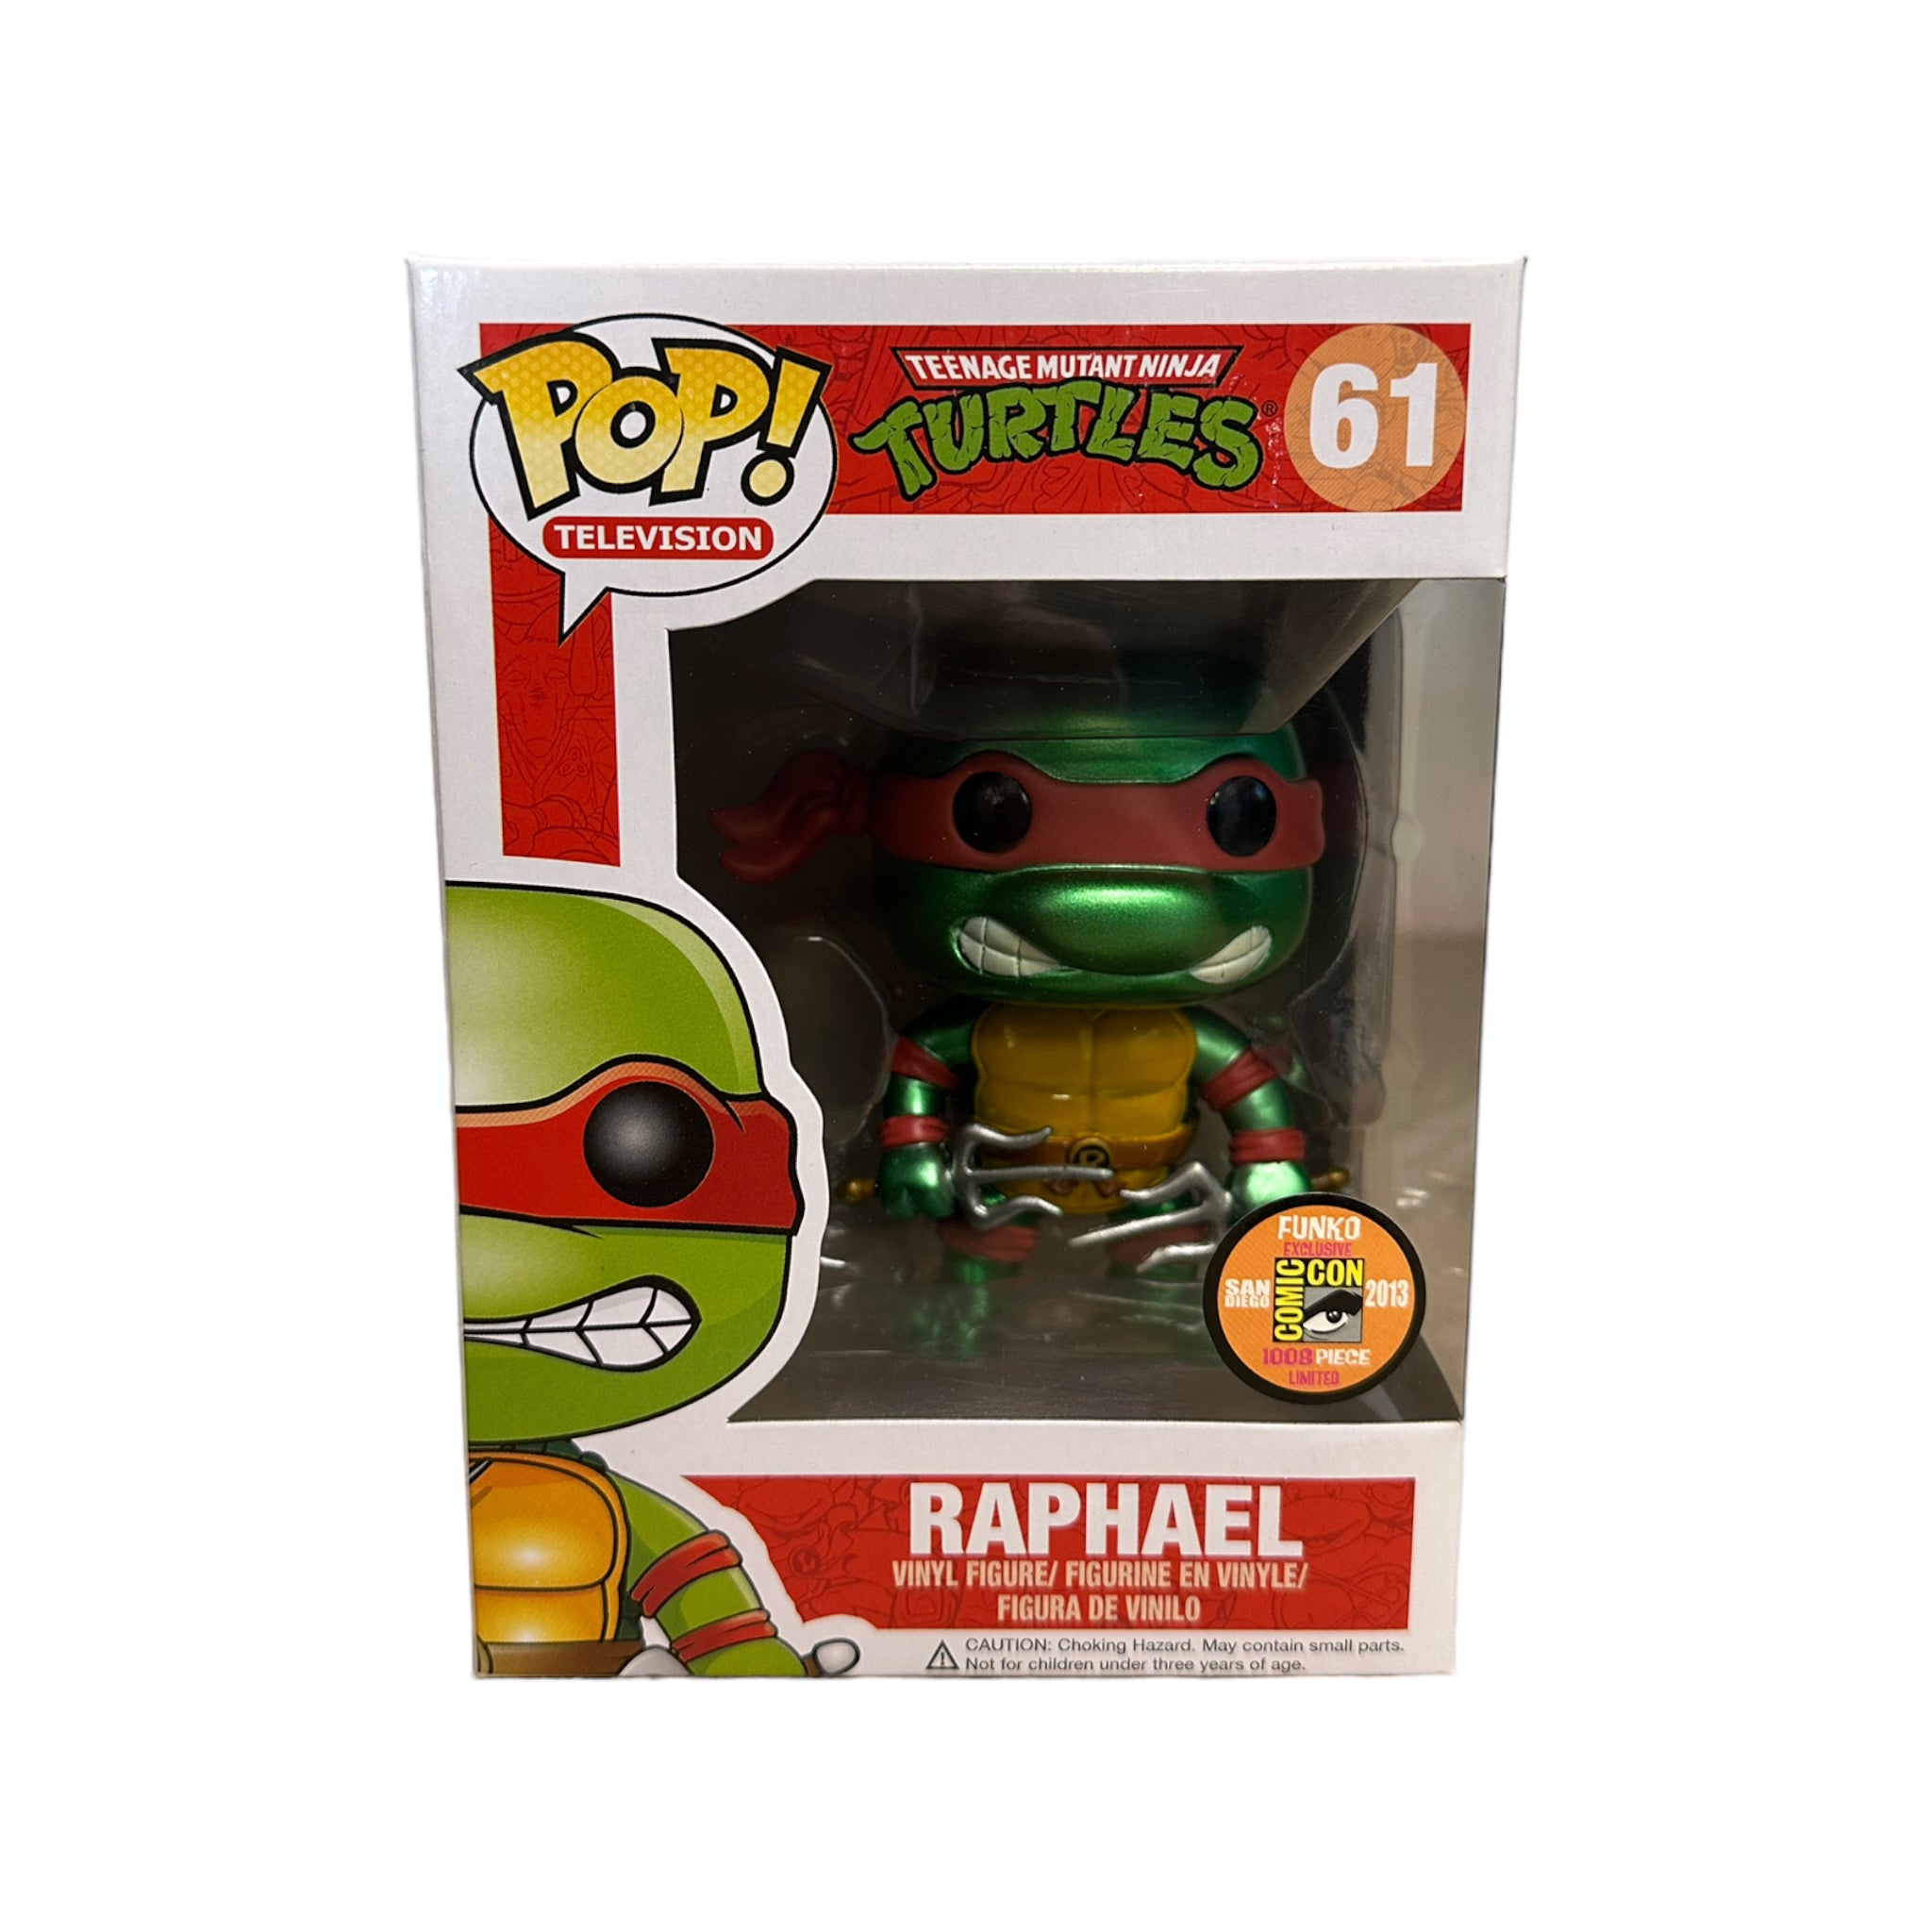 Raphael #61 (Metallic) Funko Pop! - Teenage Mutant Ninja Turtles - SDCC 2013 Exclusive LE1008 Pcs - Condition 8.75/10